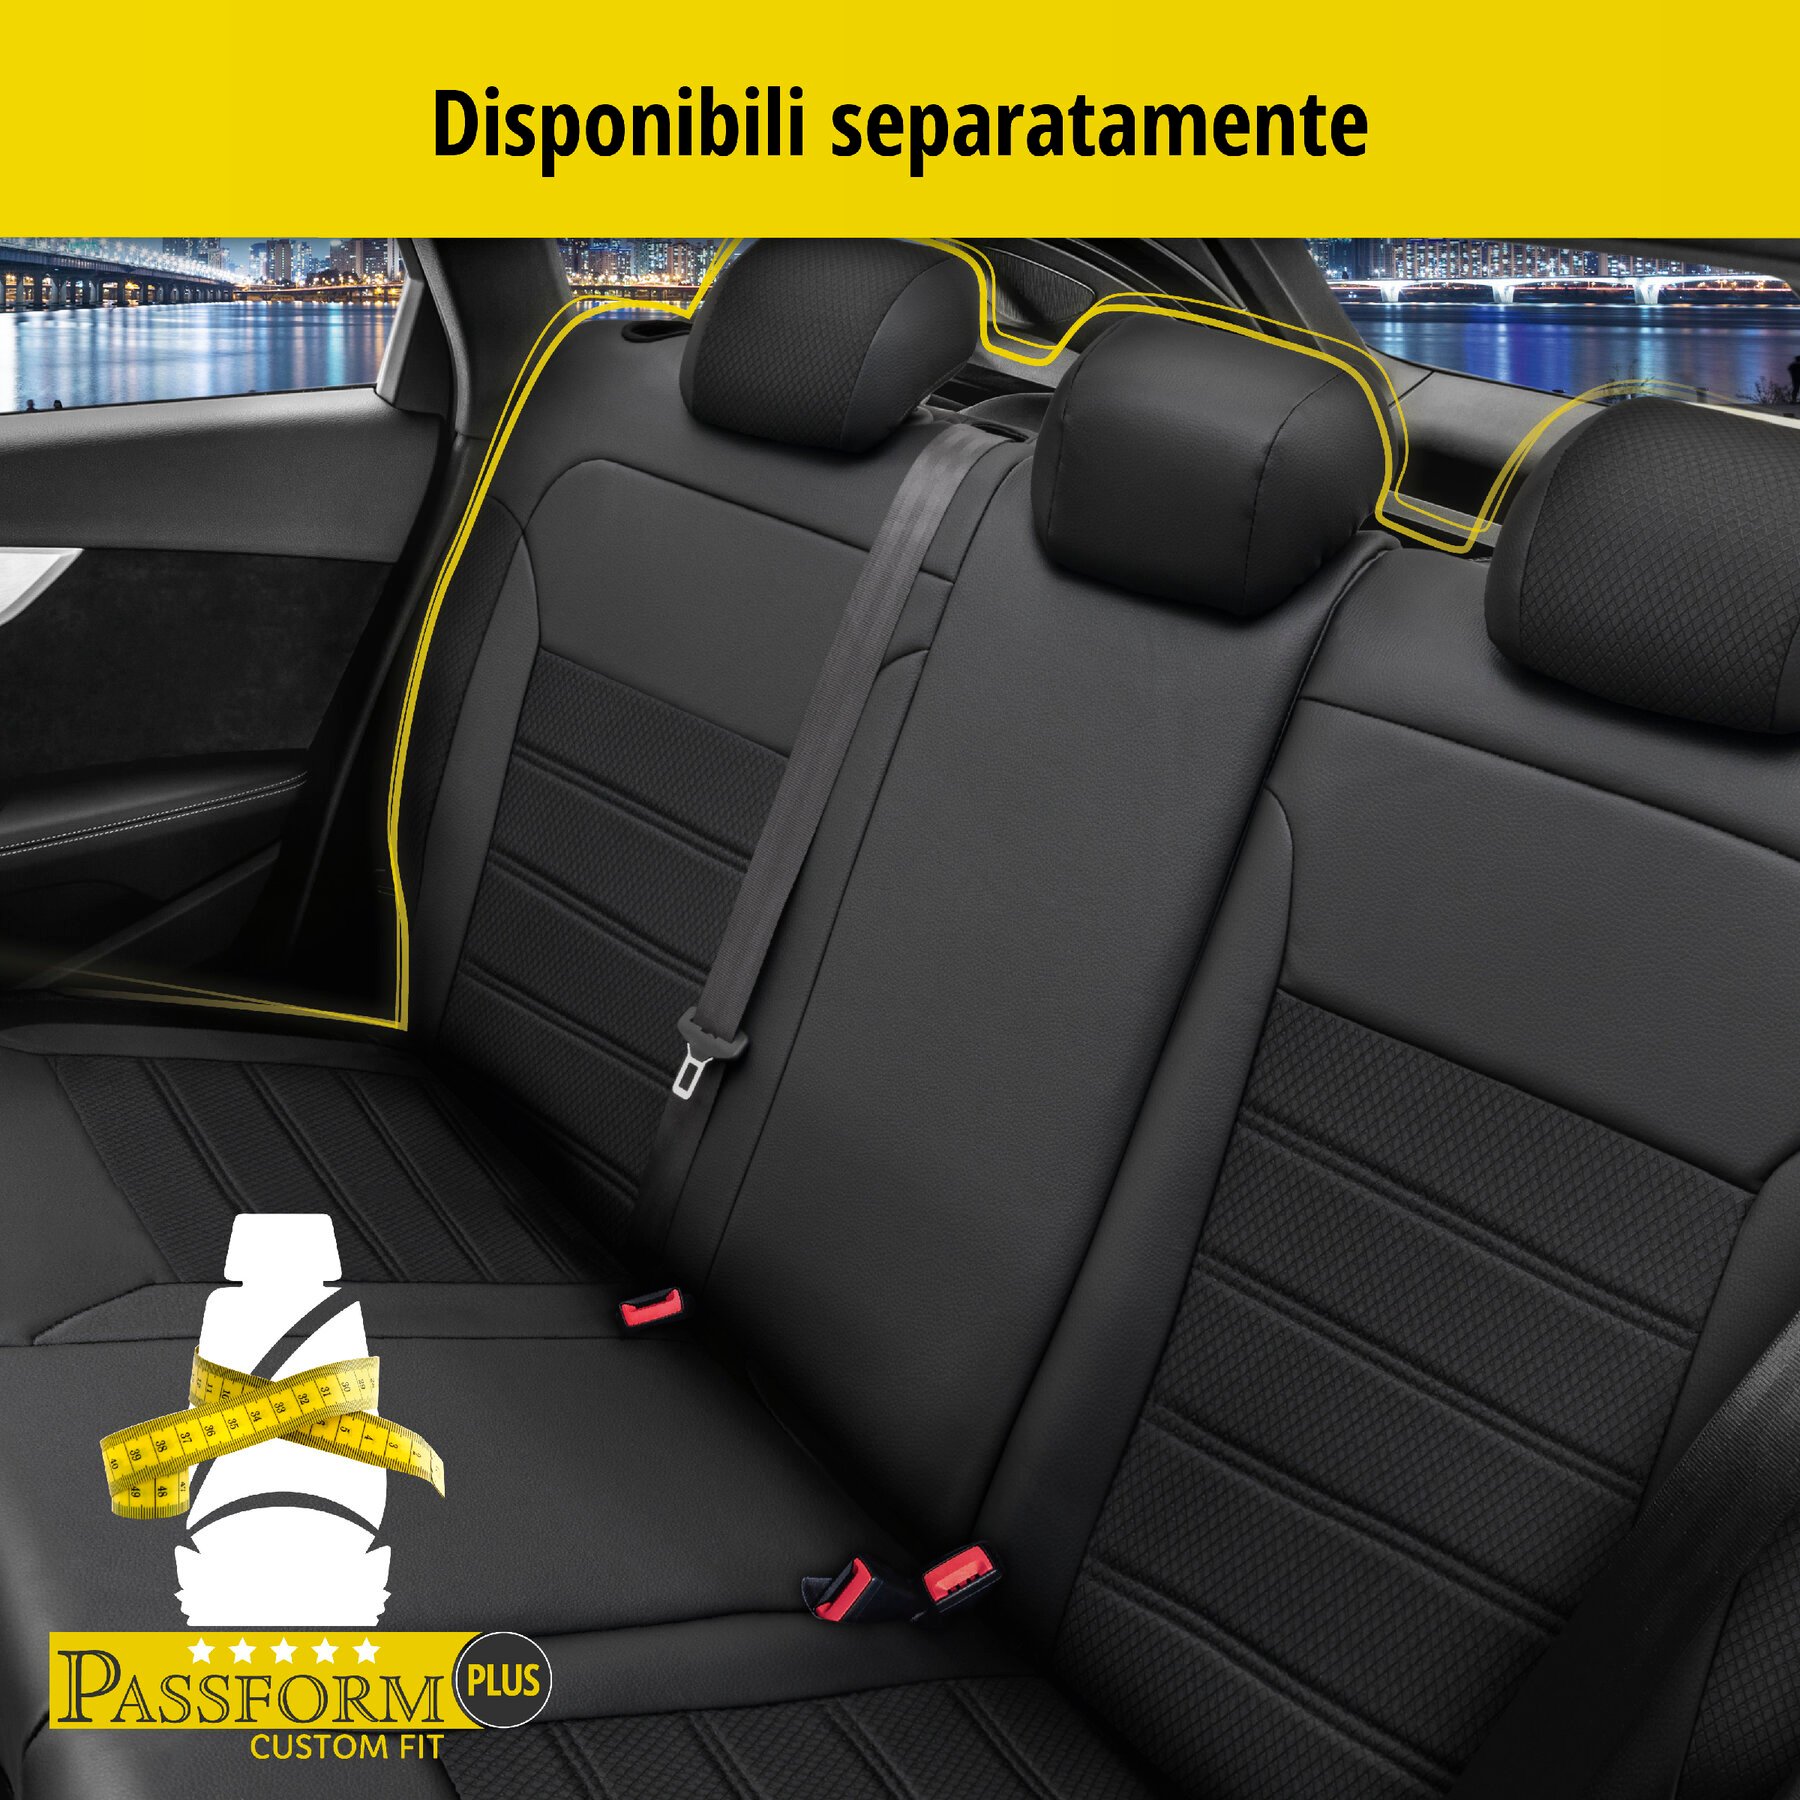 Coprisedili Aversa per VW Passat Variant (3G5, CB5) 08/2014-Oggi, 2 coprisedili per sedili normali